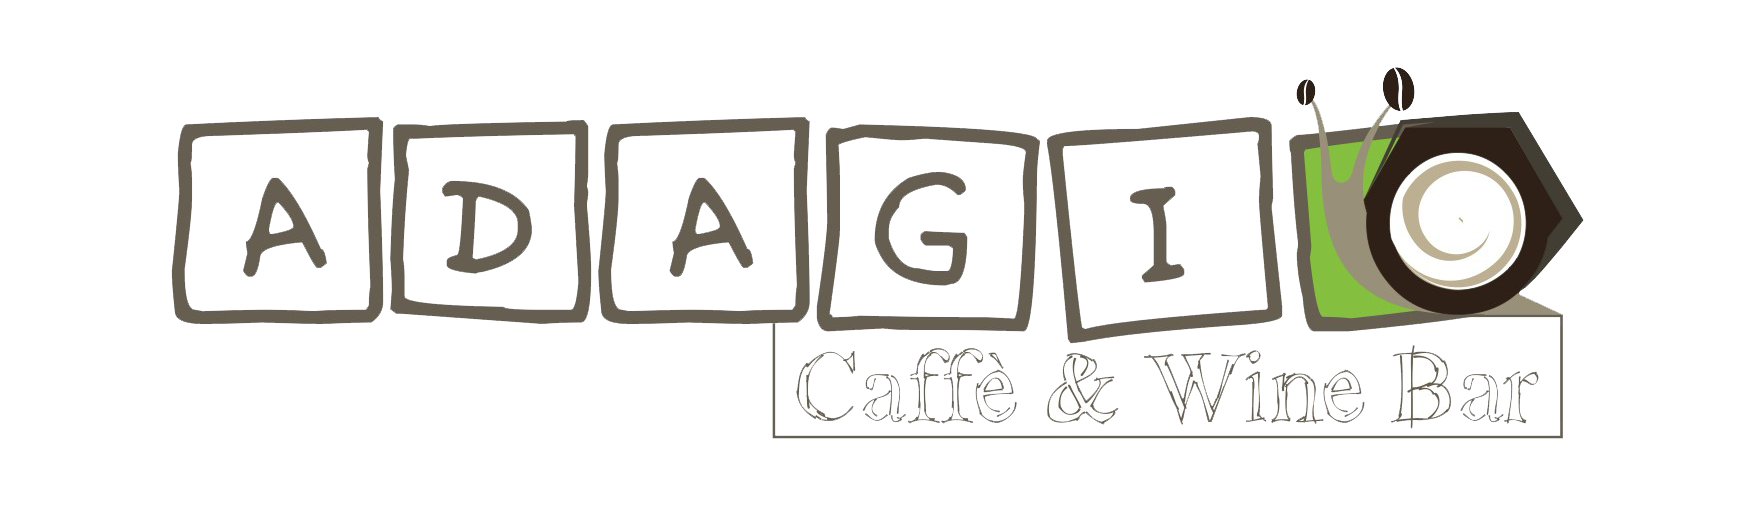 ADAGIO CAFFÈ & WINE BAR